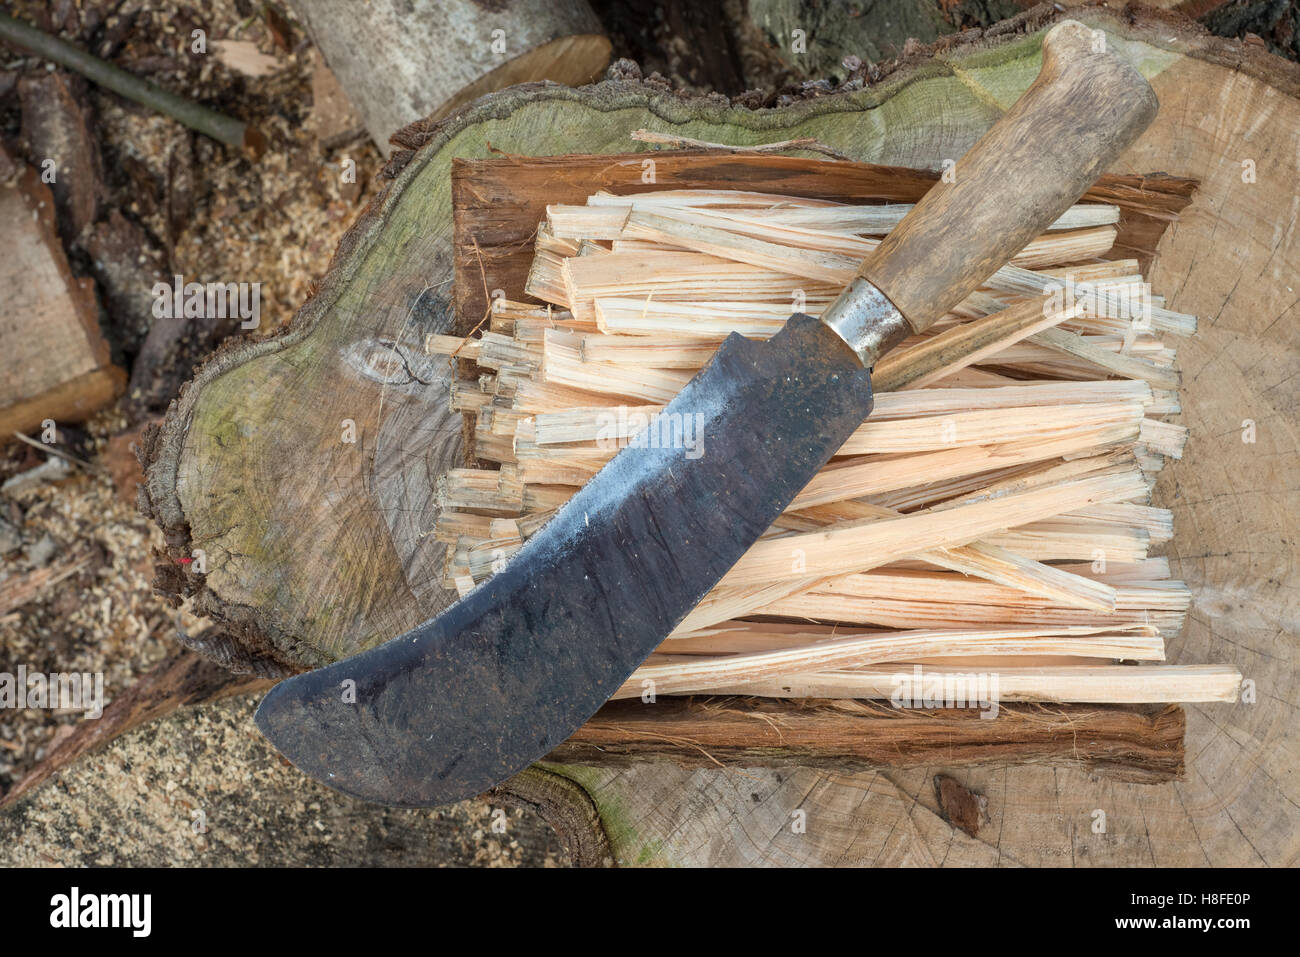 Overhead shot of a machete or billhook knife on a pile of firewood sticks Stock Photo